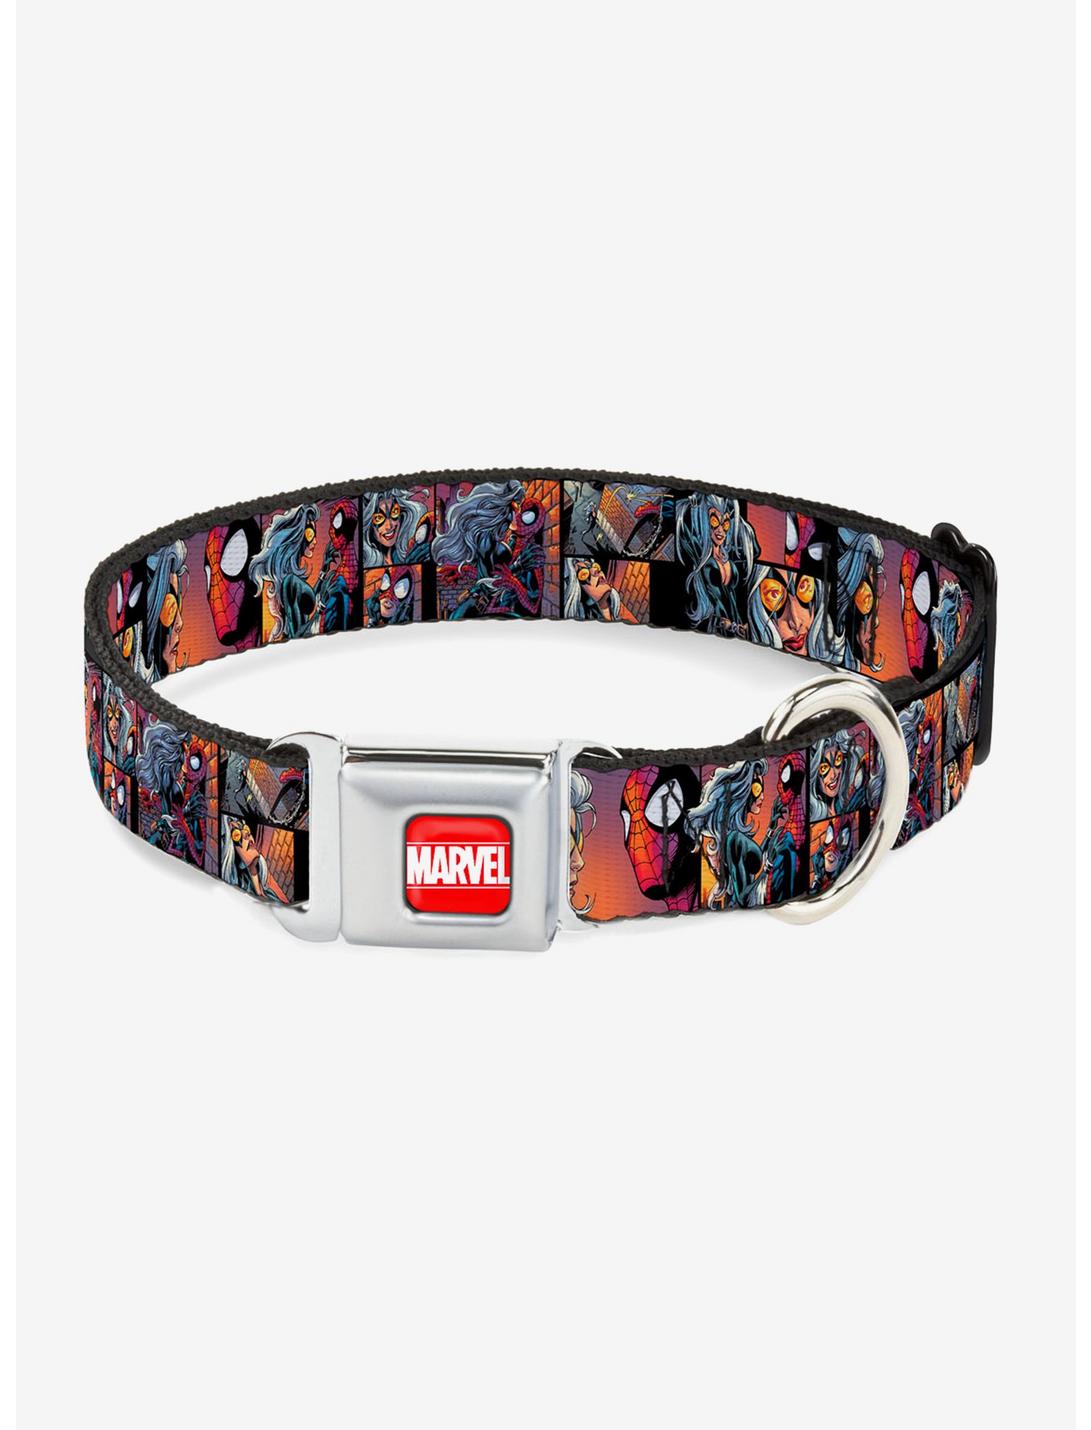 Marvel Avengers Spider-Man Black Cat Seatbelt Buckle Pet Collar, MULTICOLOR, hi-res